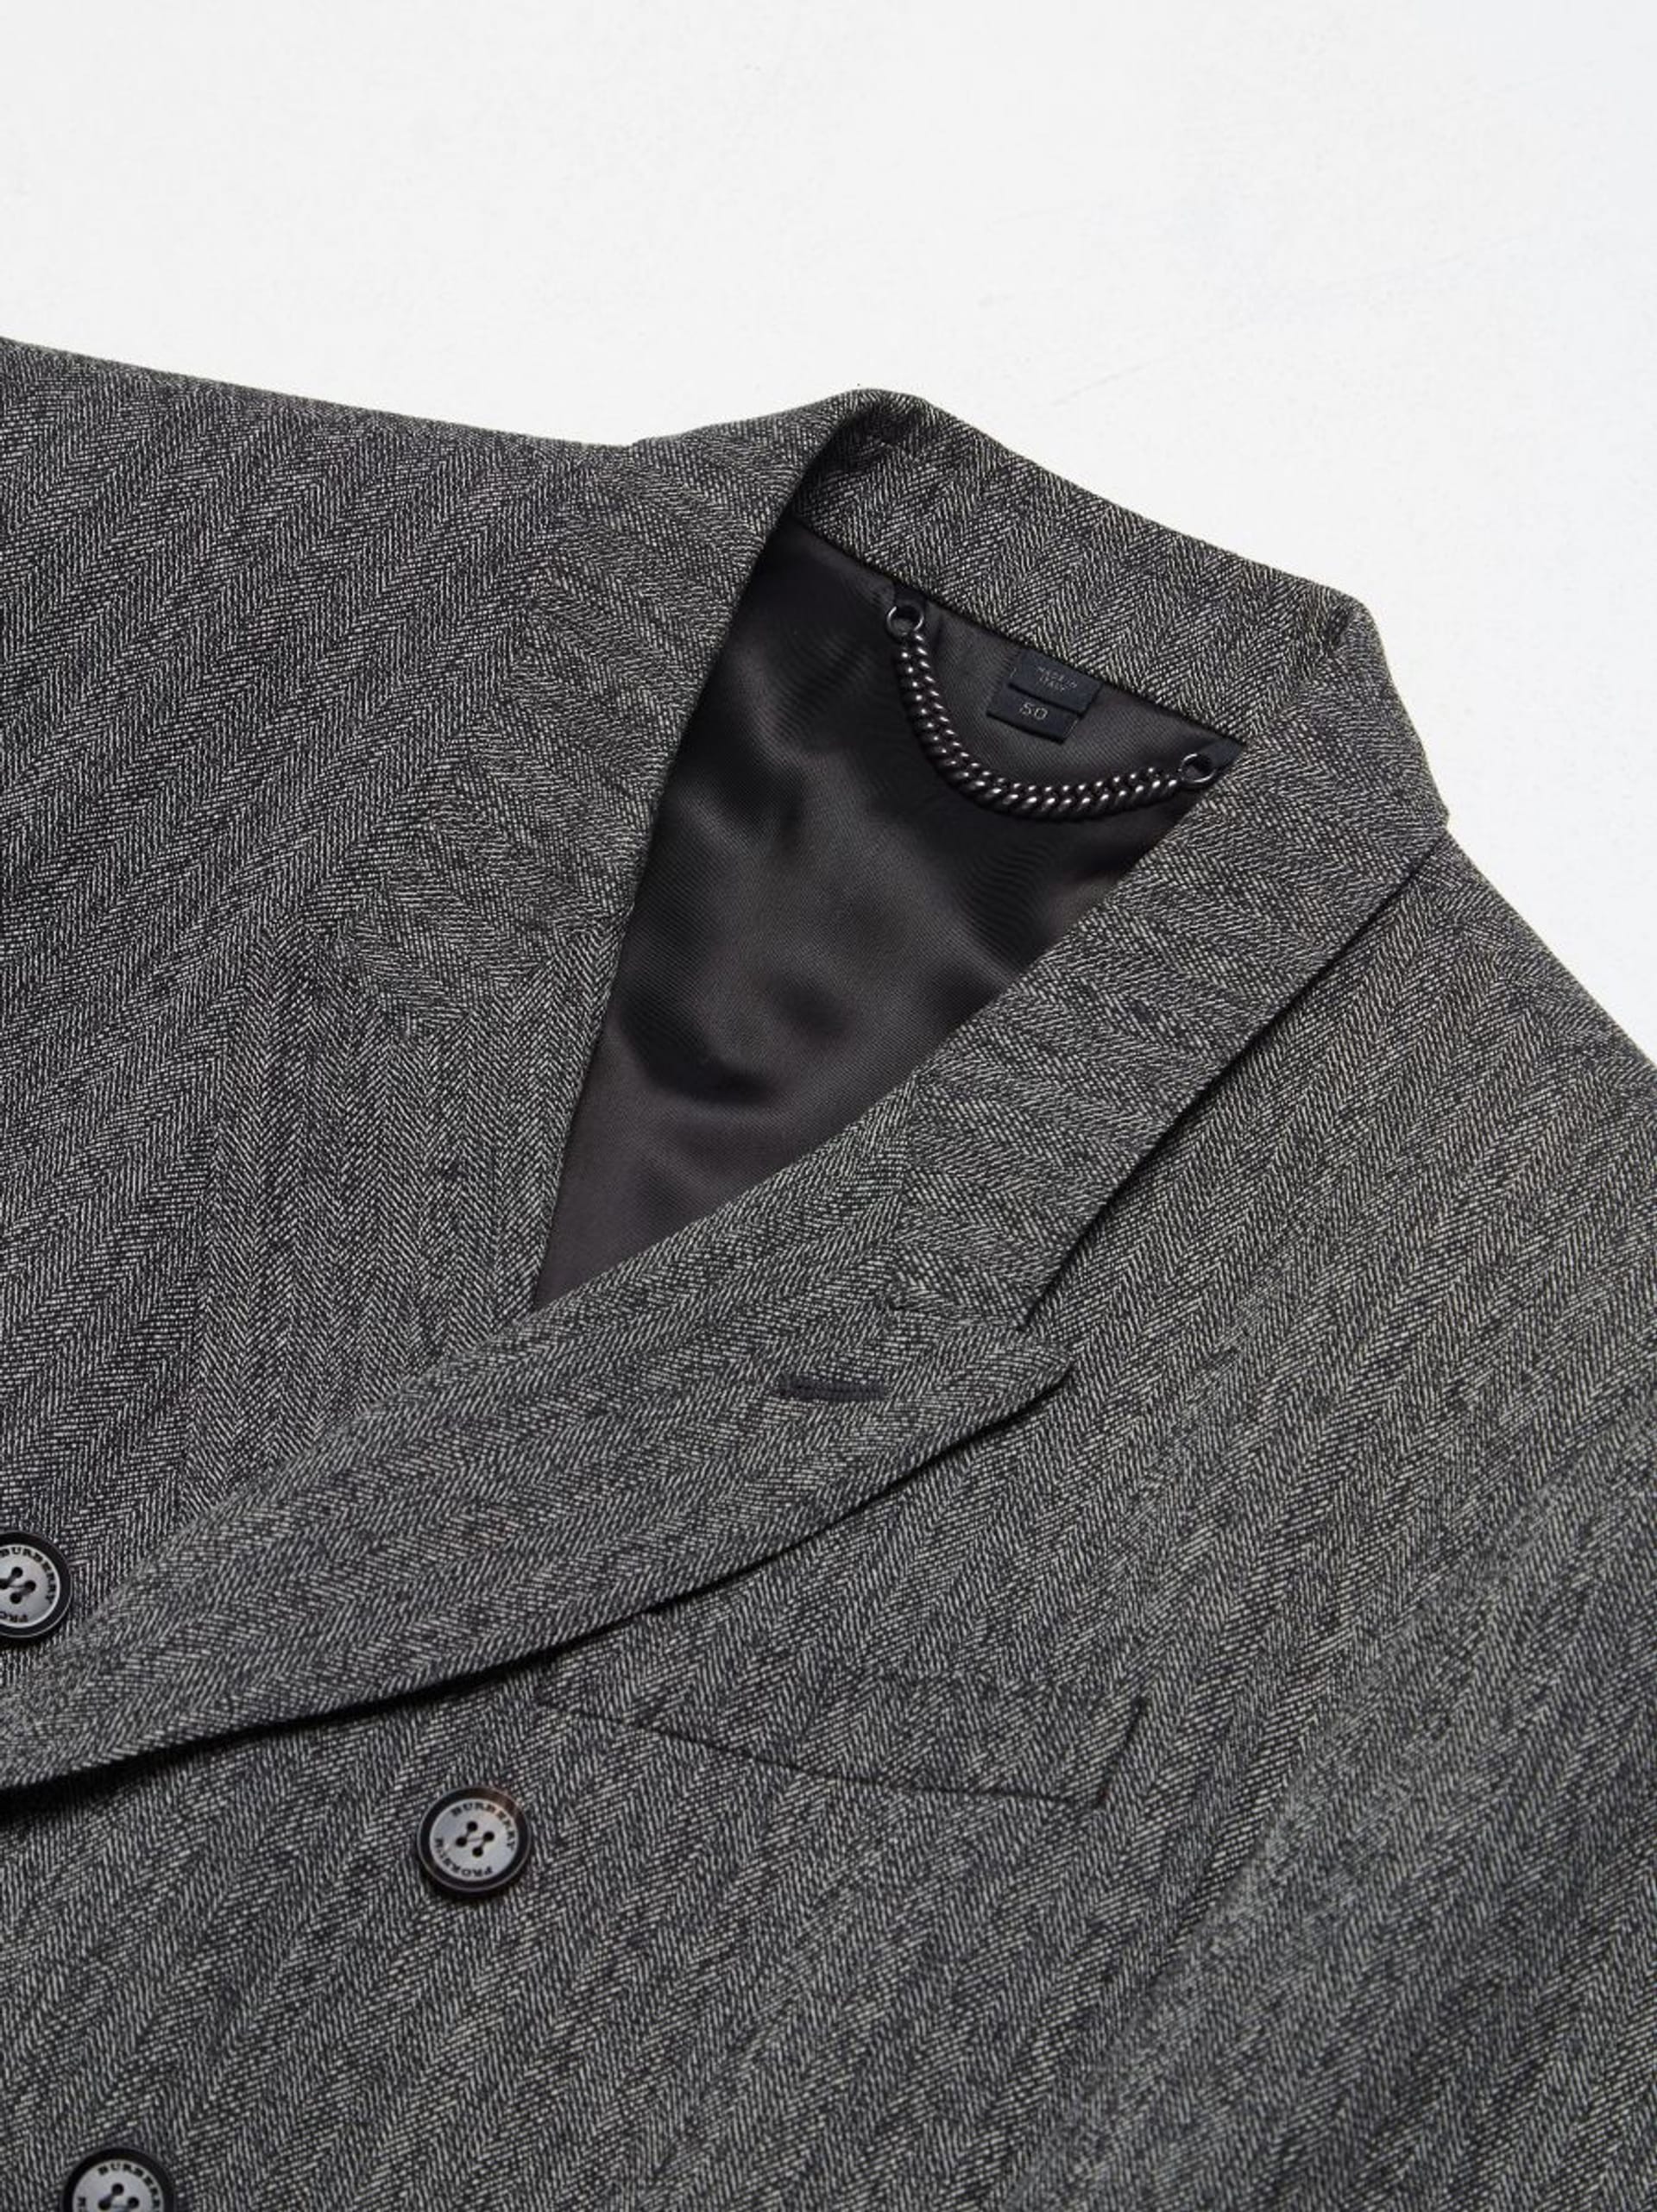 Burberry Prorsum Dark Grey Double Breasted Herringbone Wool Jacket